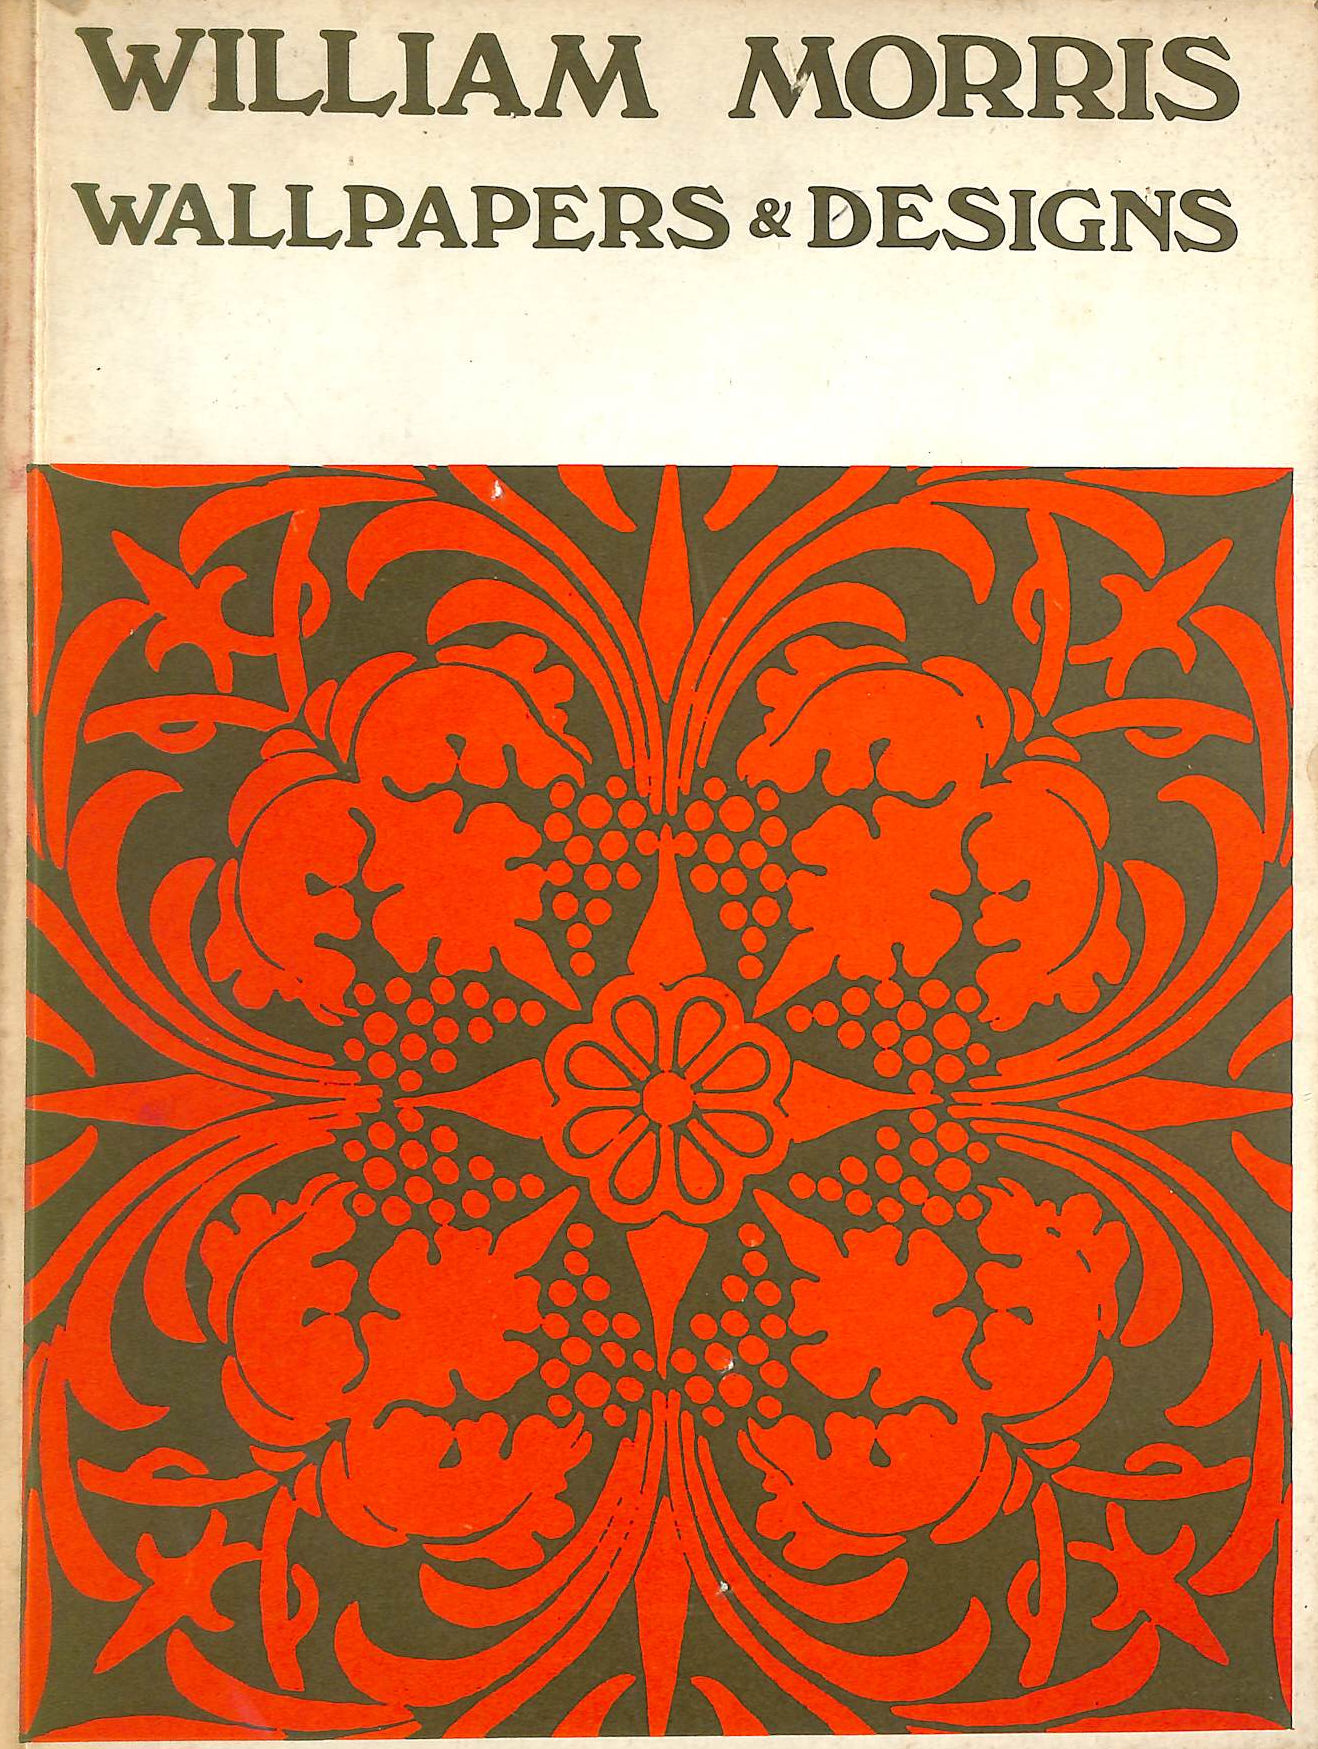 NONE GIVEN - William Morris 2005 Calendar: Designs for Wallpaper and Textiles